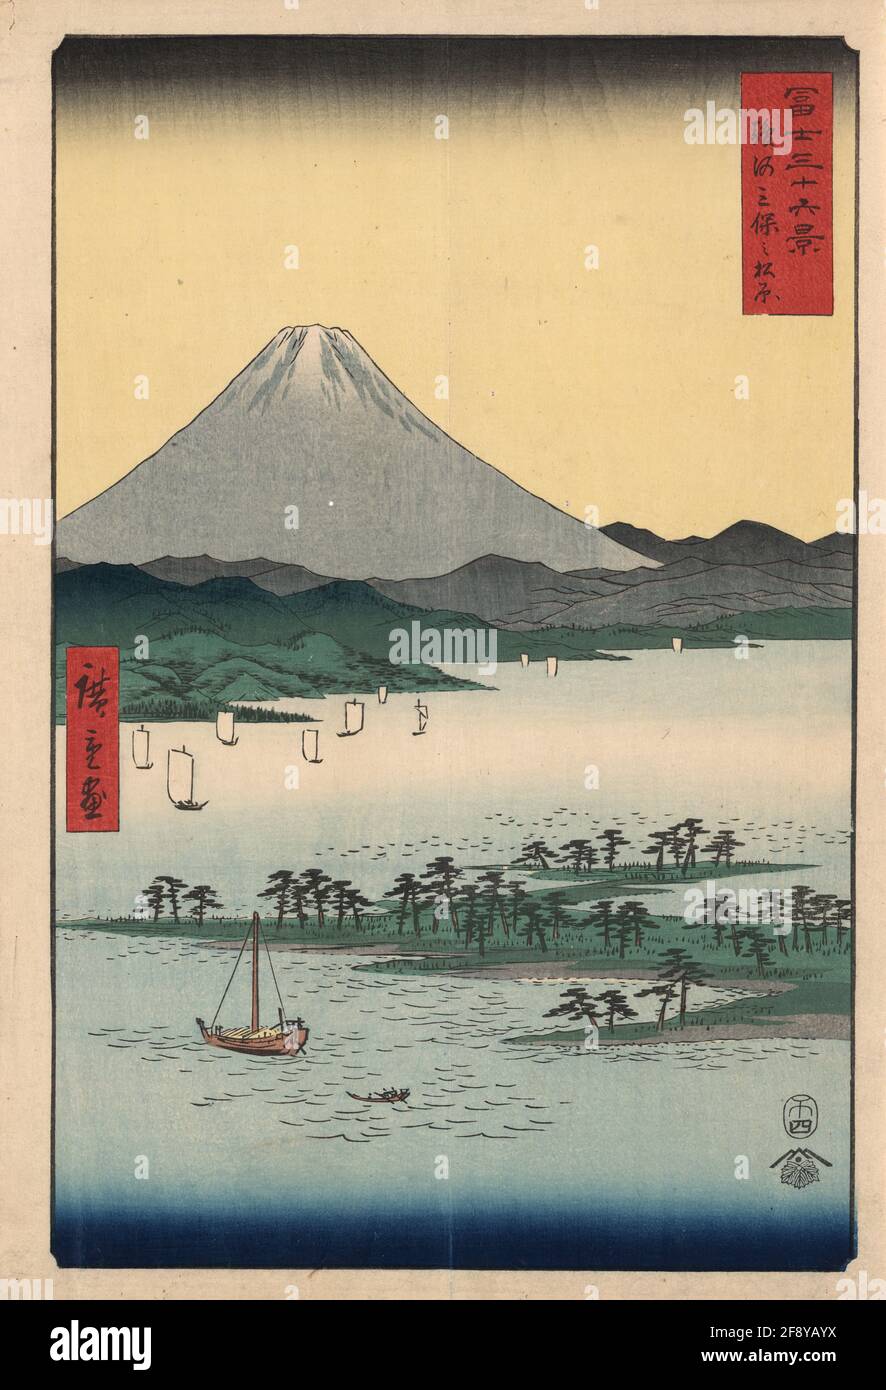 Mount Fuji and the Suruga Bay by Utagawa (Ando) Hiroshige Stock Photo